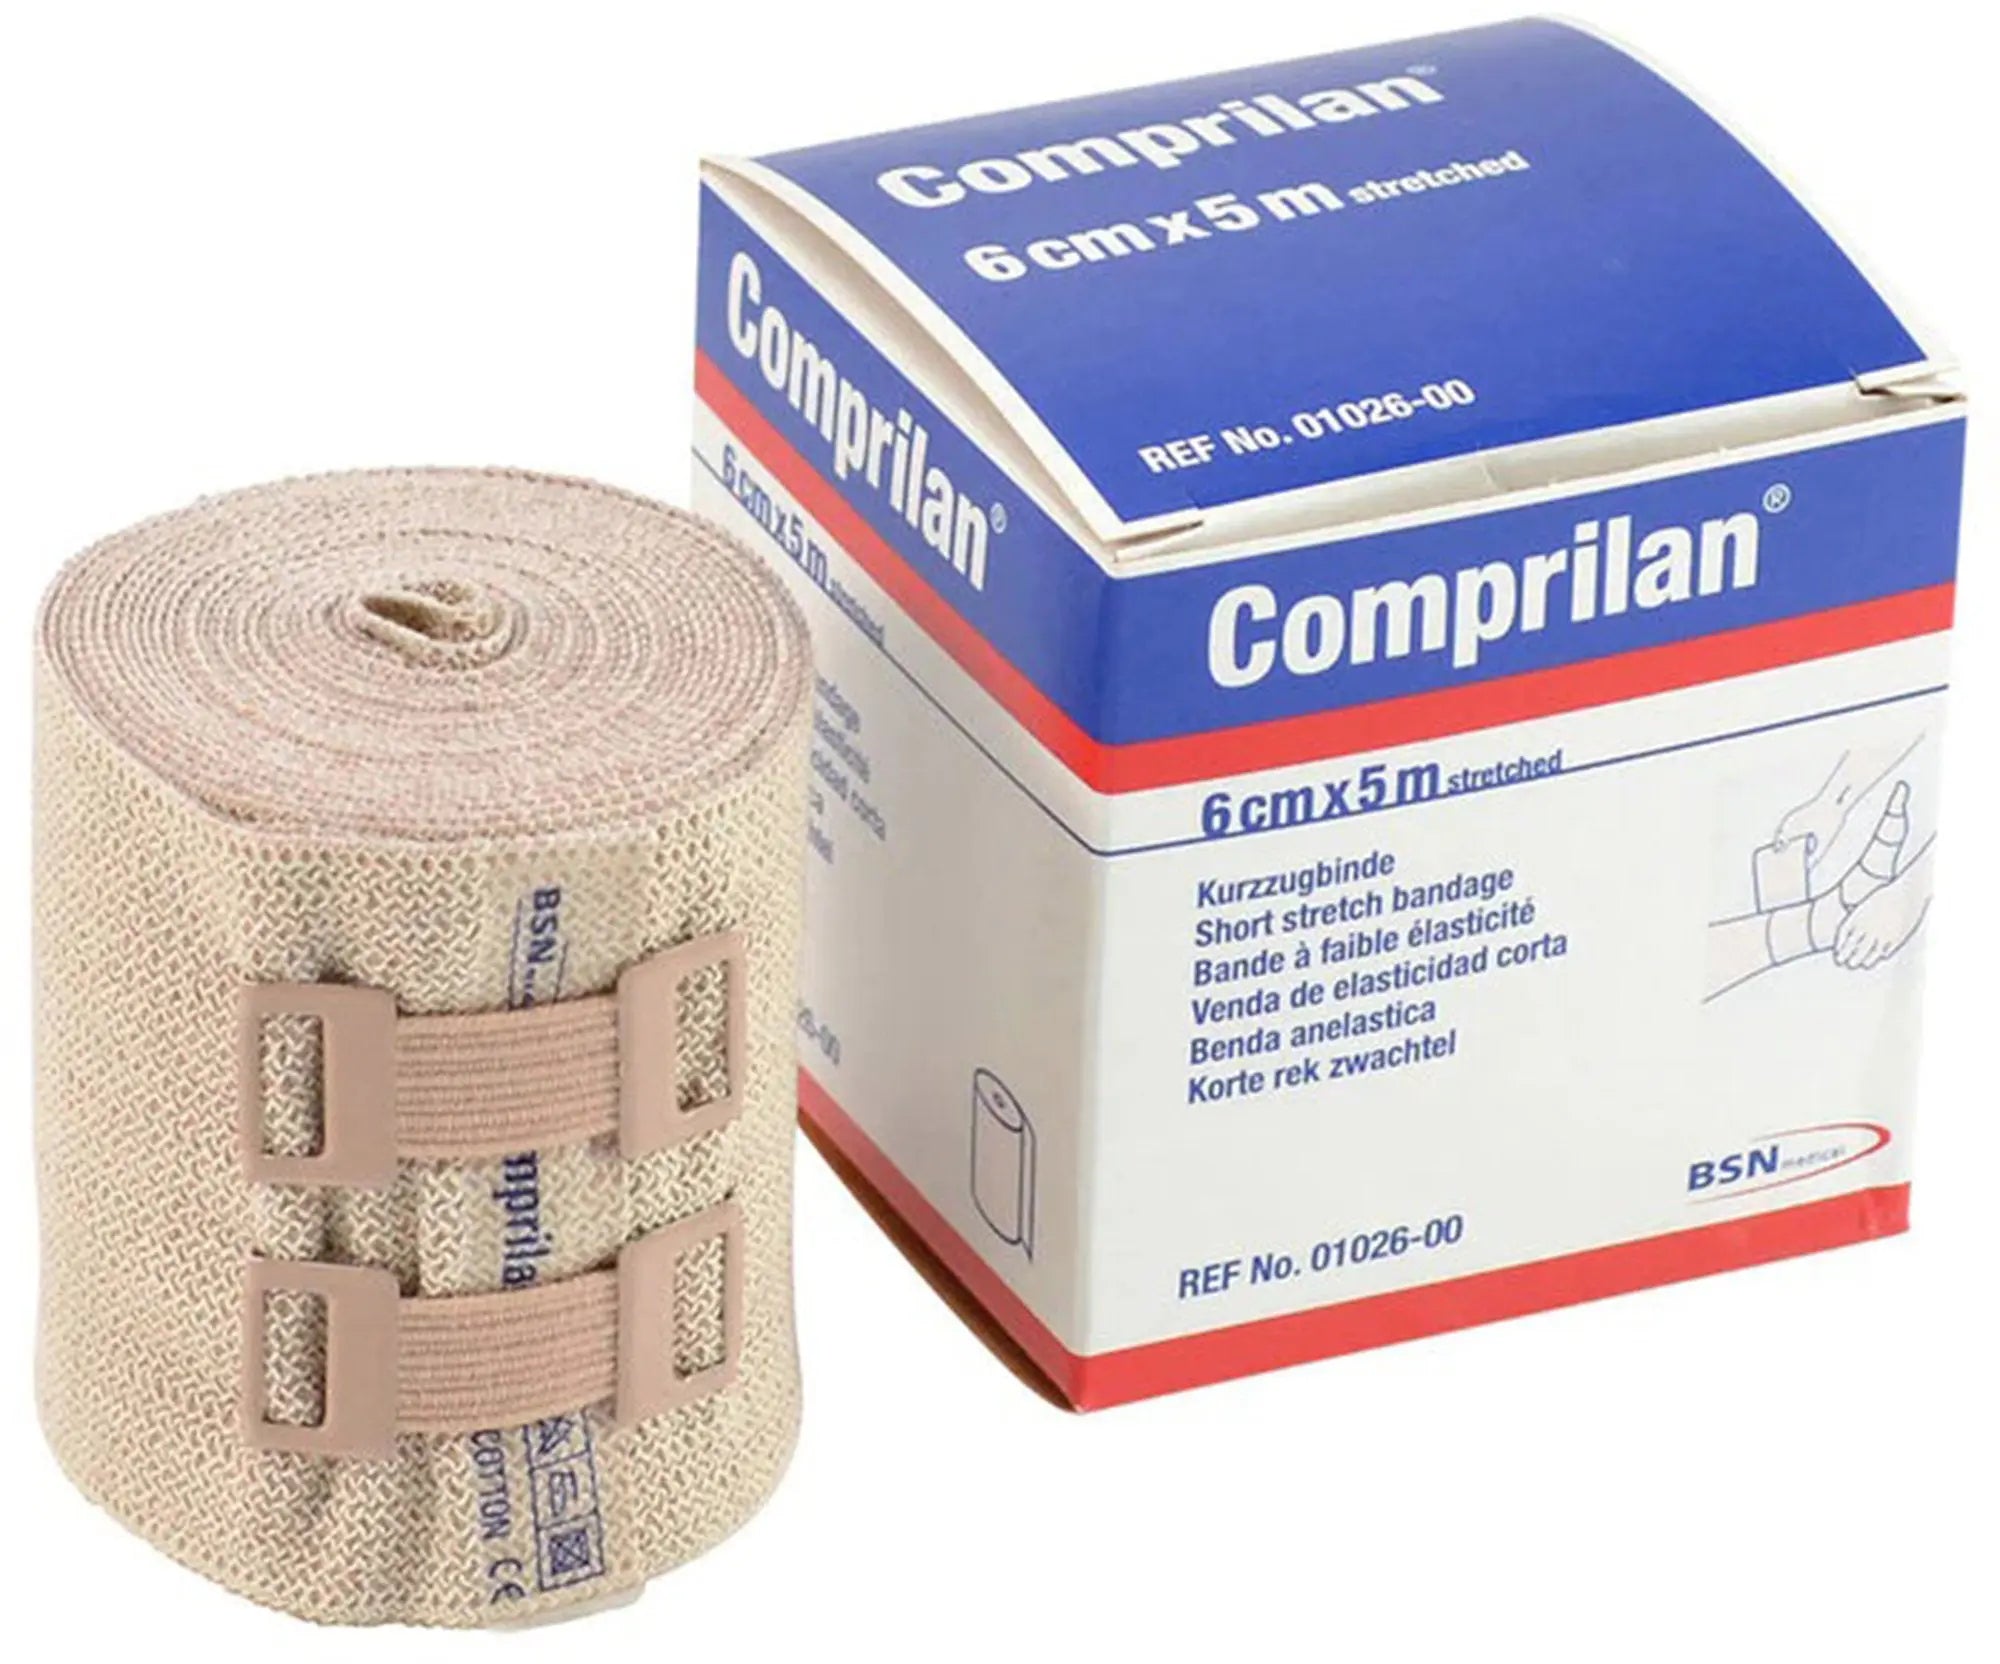 BSN Medical Comprilan Short Stretch Compression Bandage - Wellwise